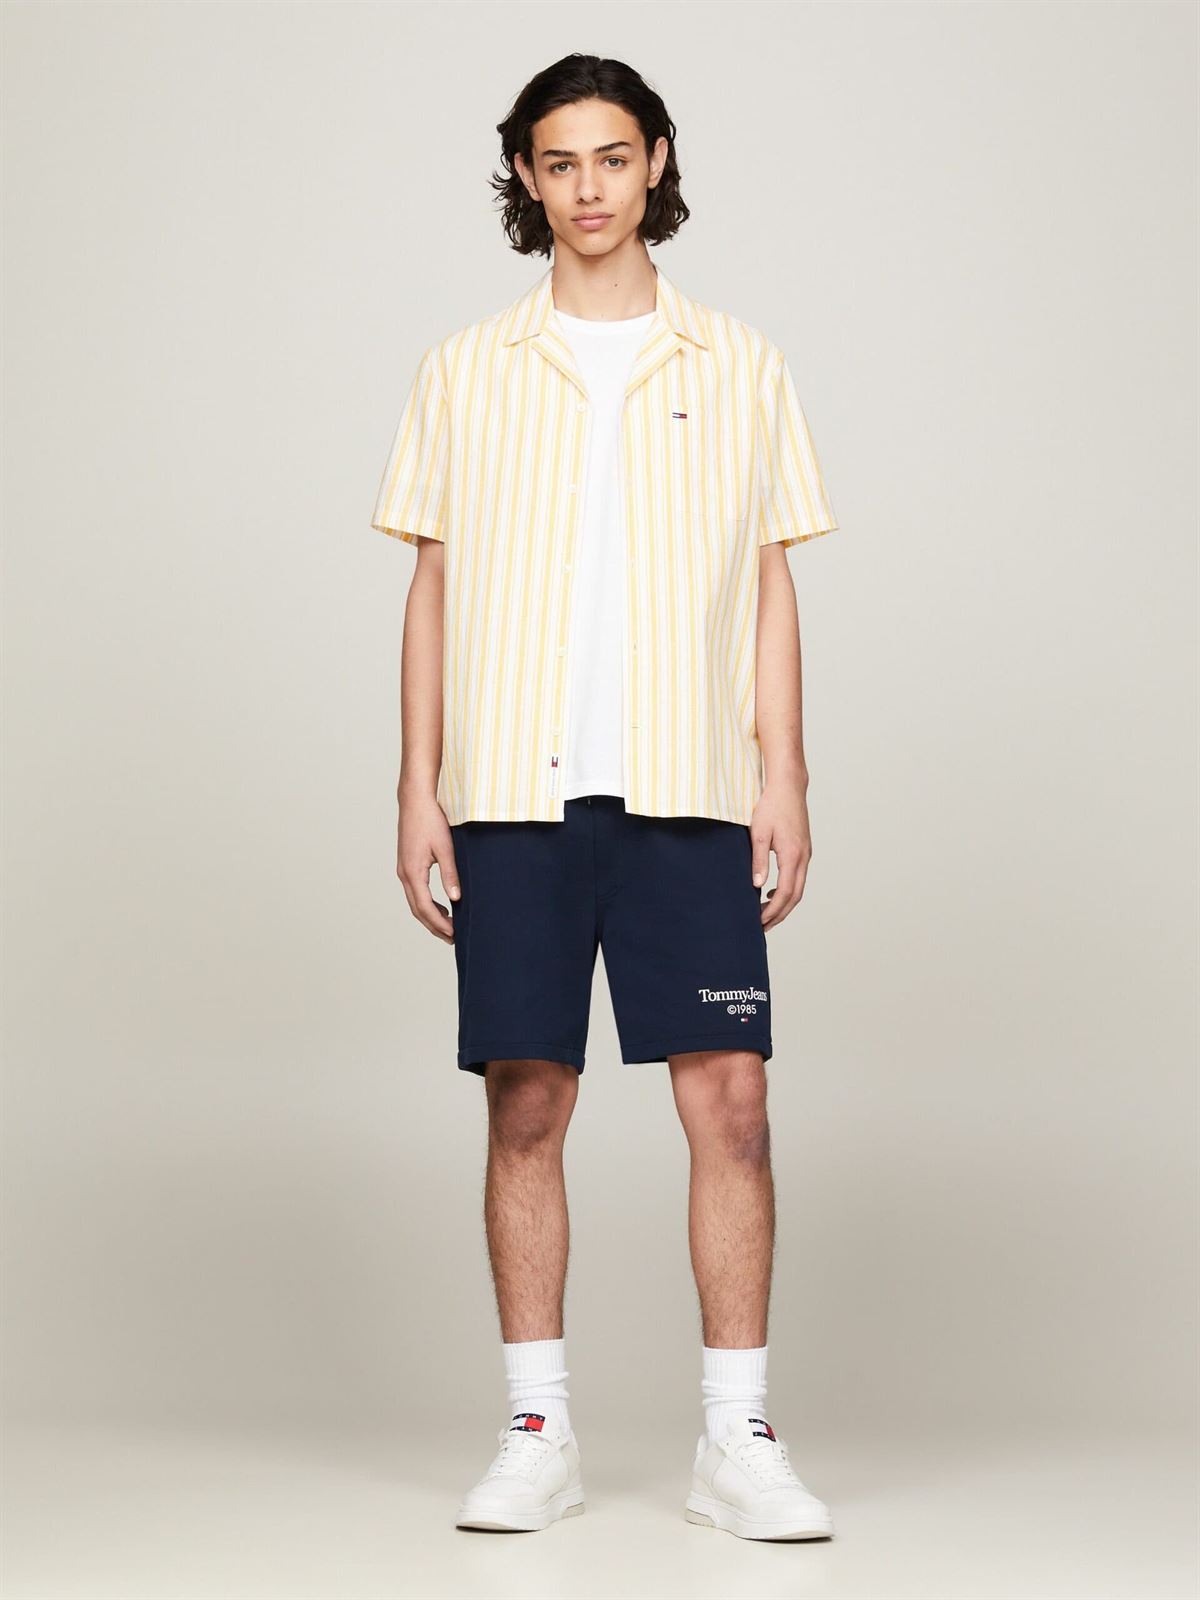 Camisa Tommy Jeans DM0DM18961 ZFM warm yellow Stripe - Imagen 2